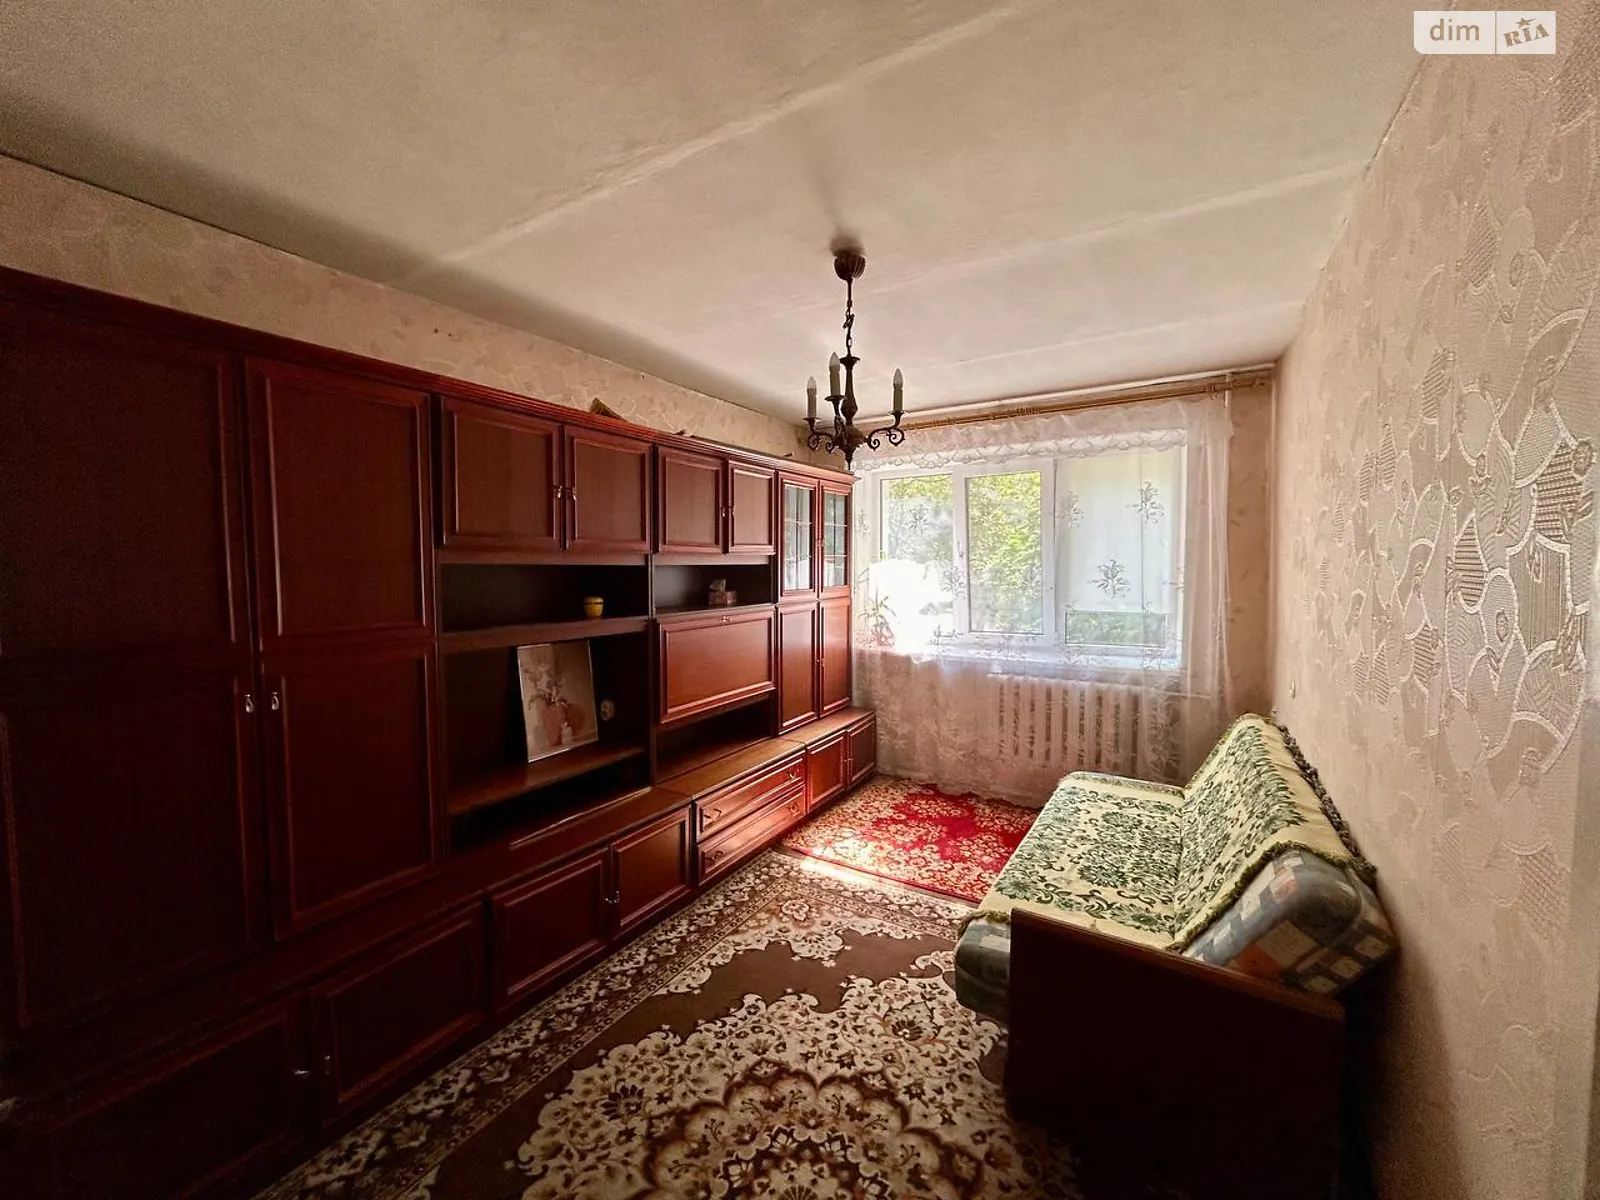 2-кімнатна квартира 45 кв. м у Луцьку, цена: 35000 $ - фото 1